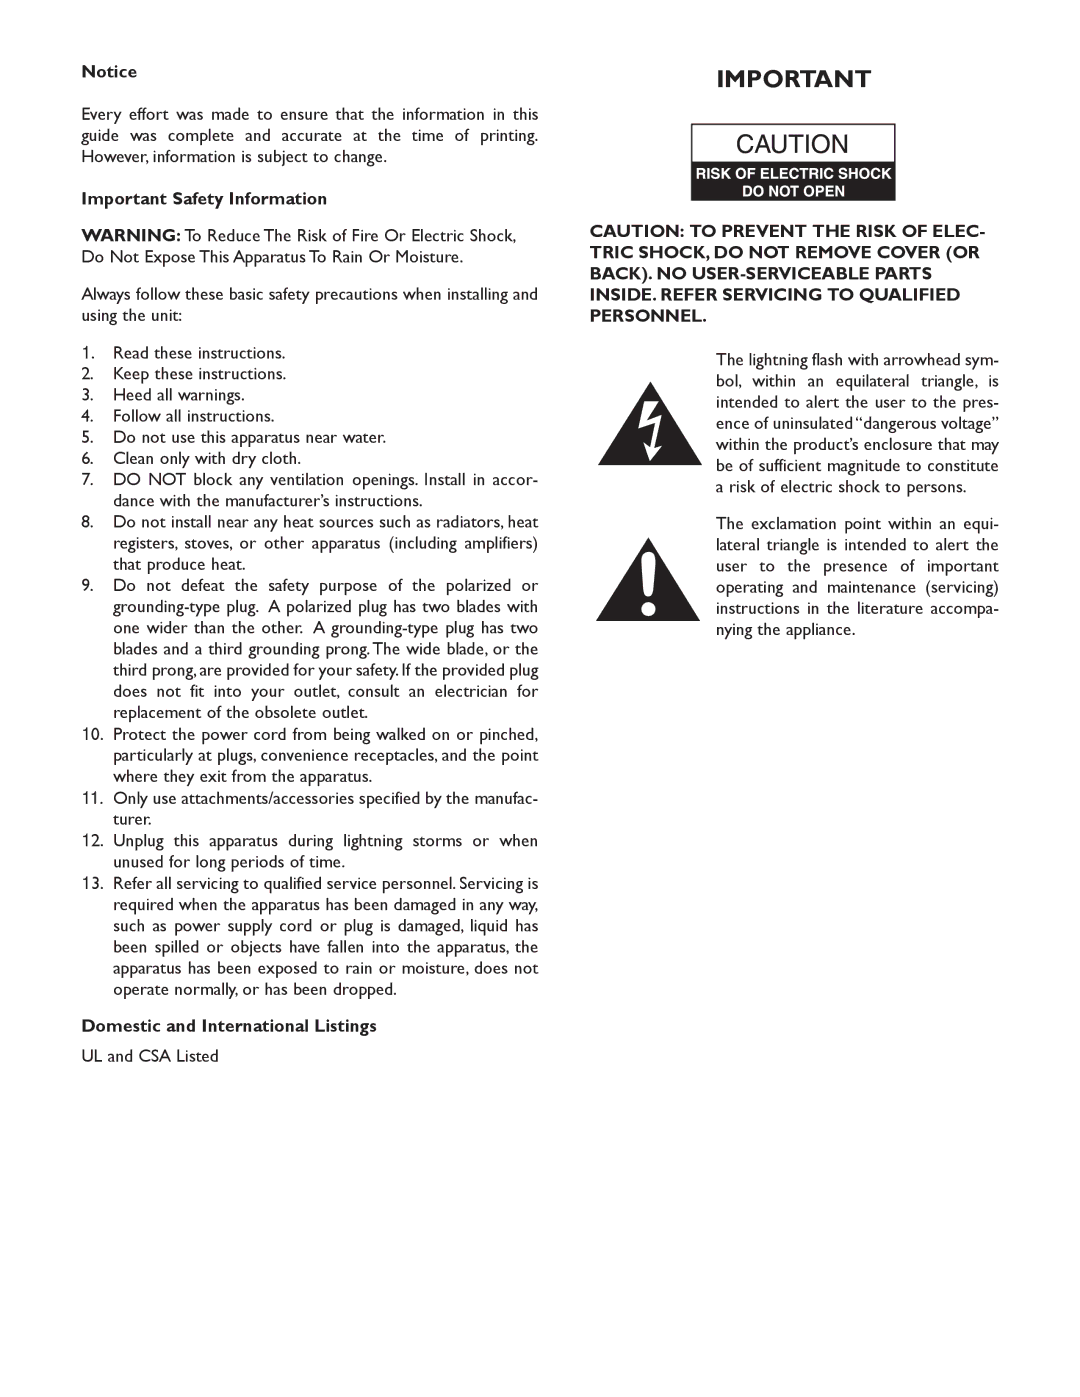 Bogen BOGEN WV100, WV250 Manual, WV150 specifications Important Safety Information, Domestic and International Listings 